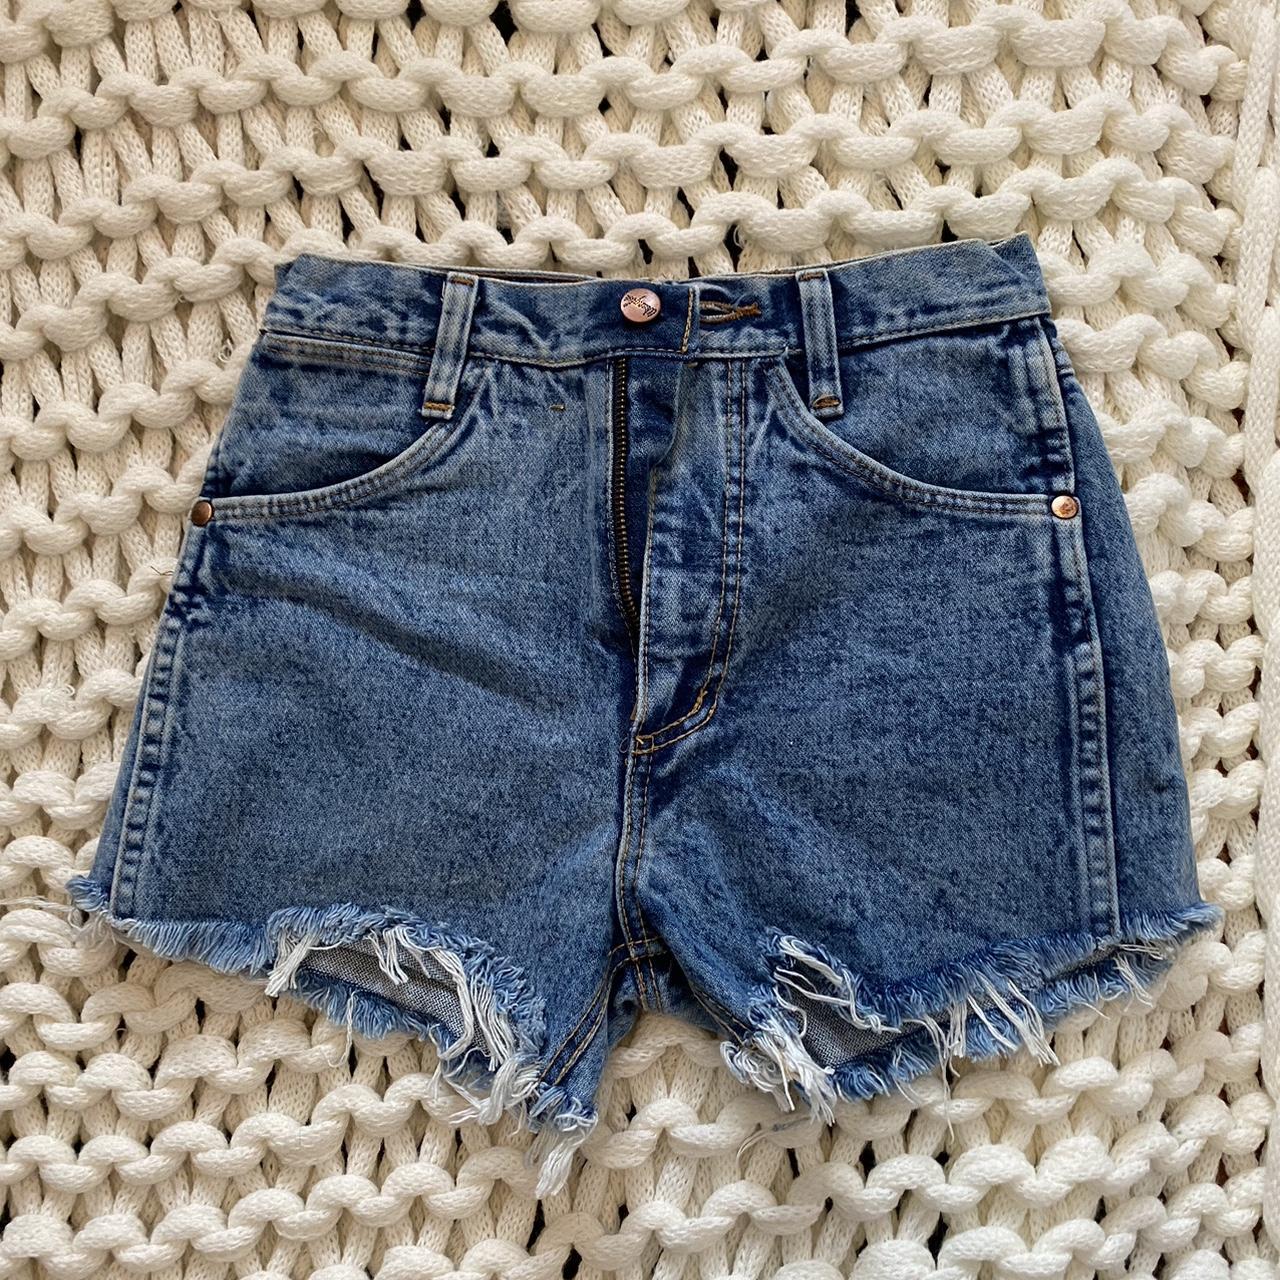 Wrangler short jeans shorts - Depop